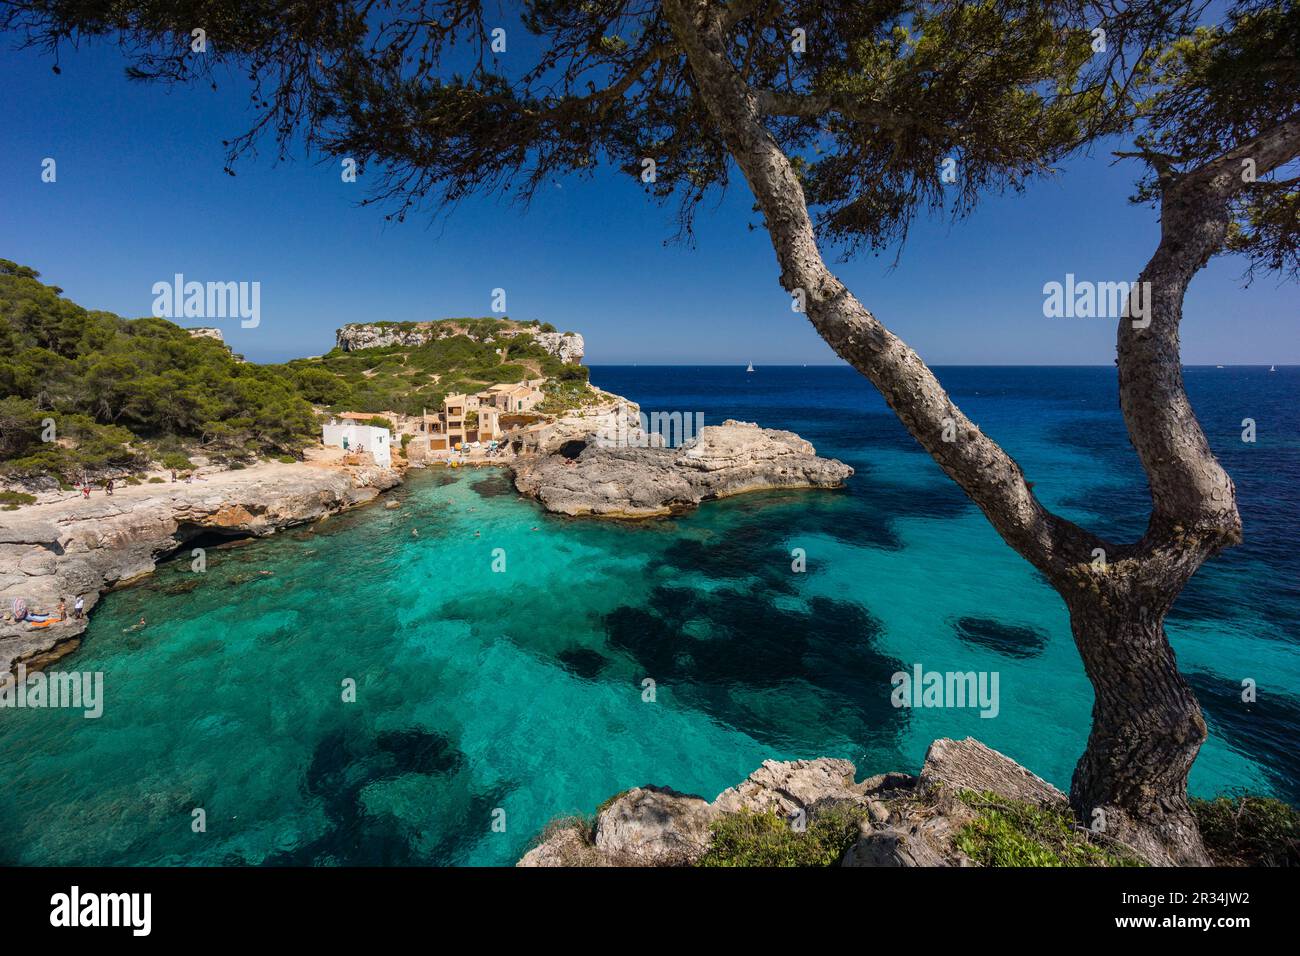 Cala s'Almunia, Santanyi, Mallorca, balearic islands, spain, europe. Stock Photo